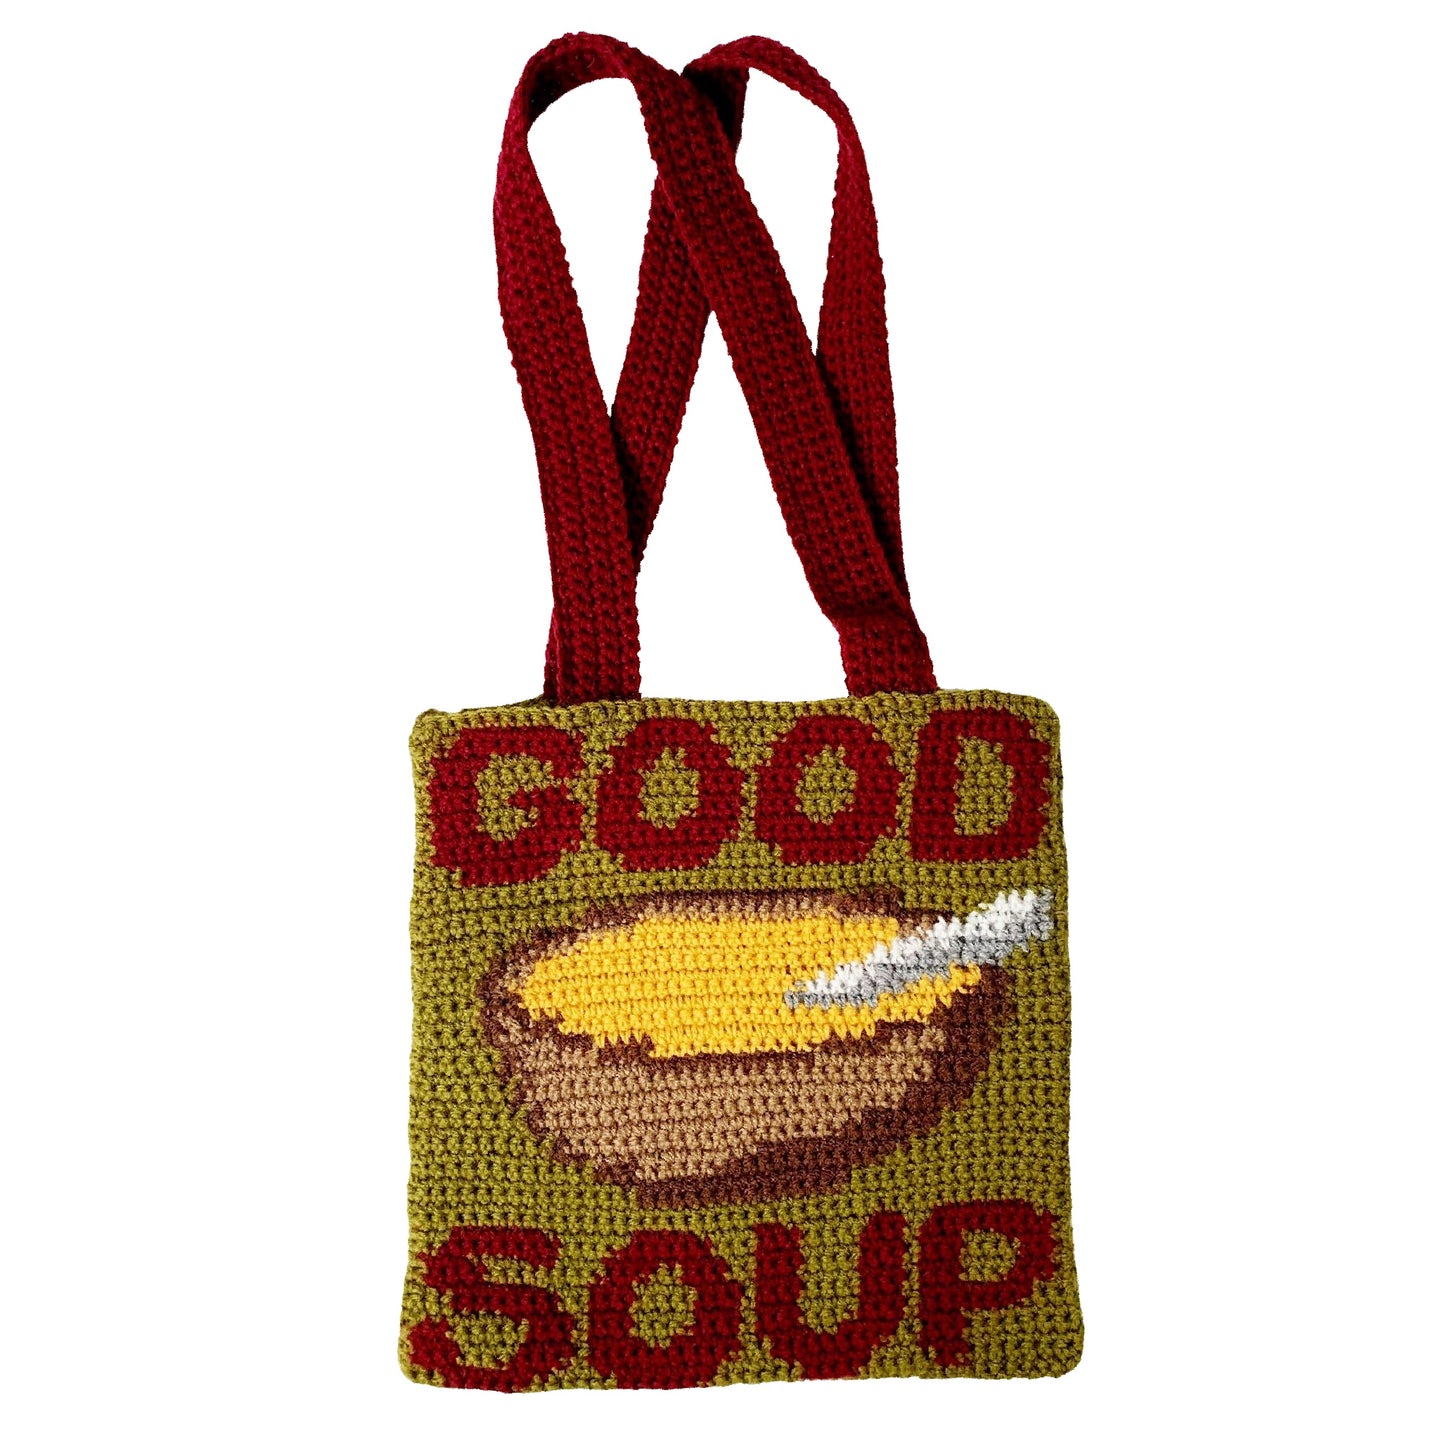 Good Soup Tote Bag by Carolannie Crochet